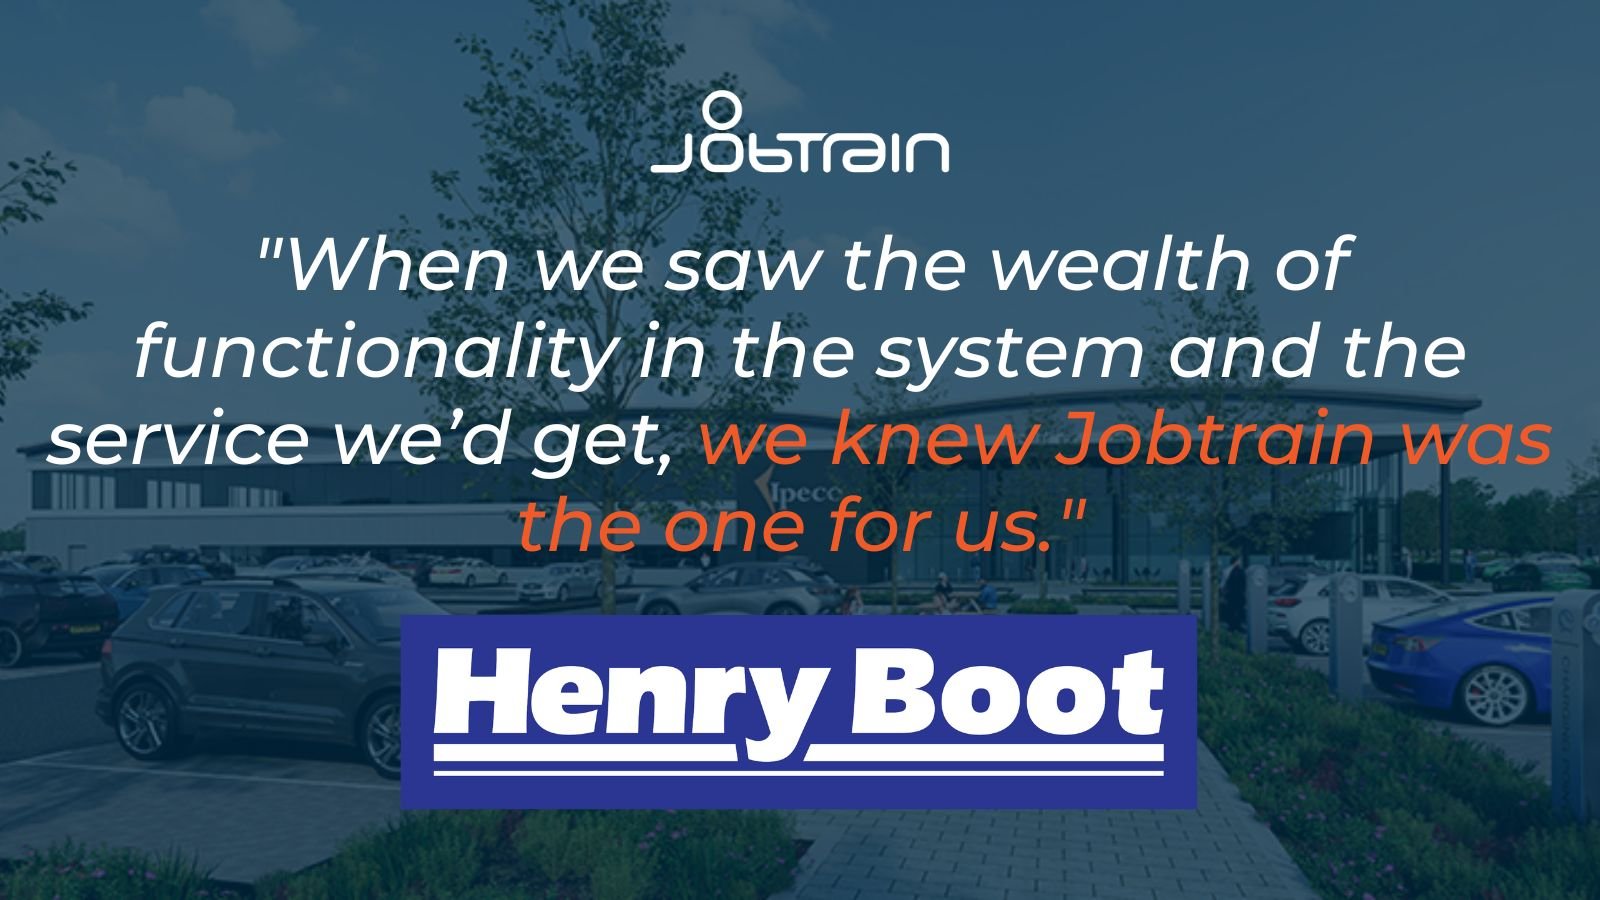 Henry Boot testimonial about Jobtrain